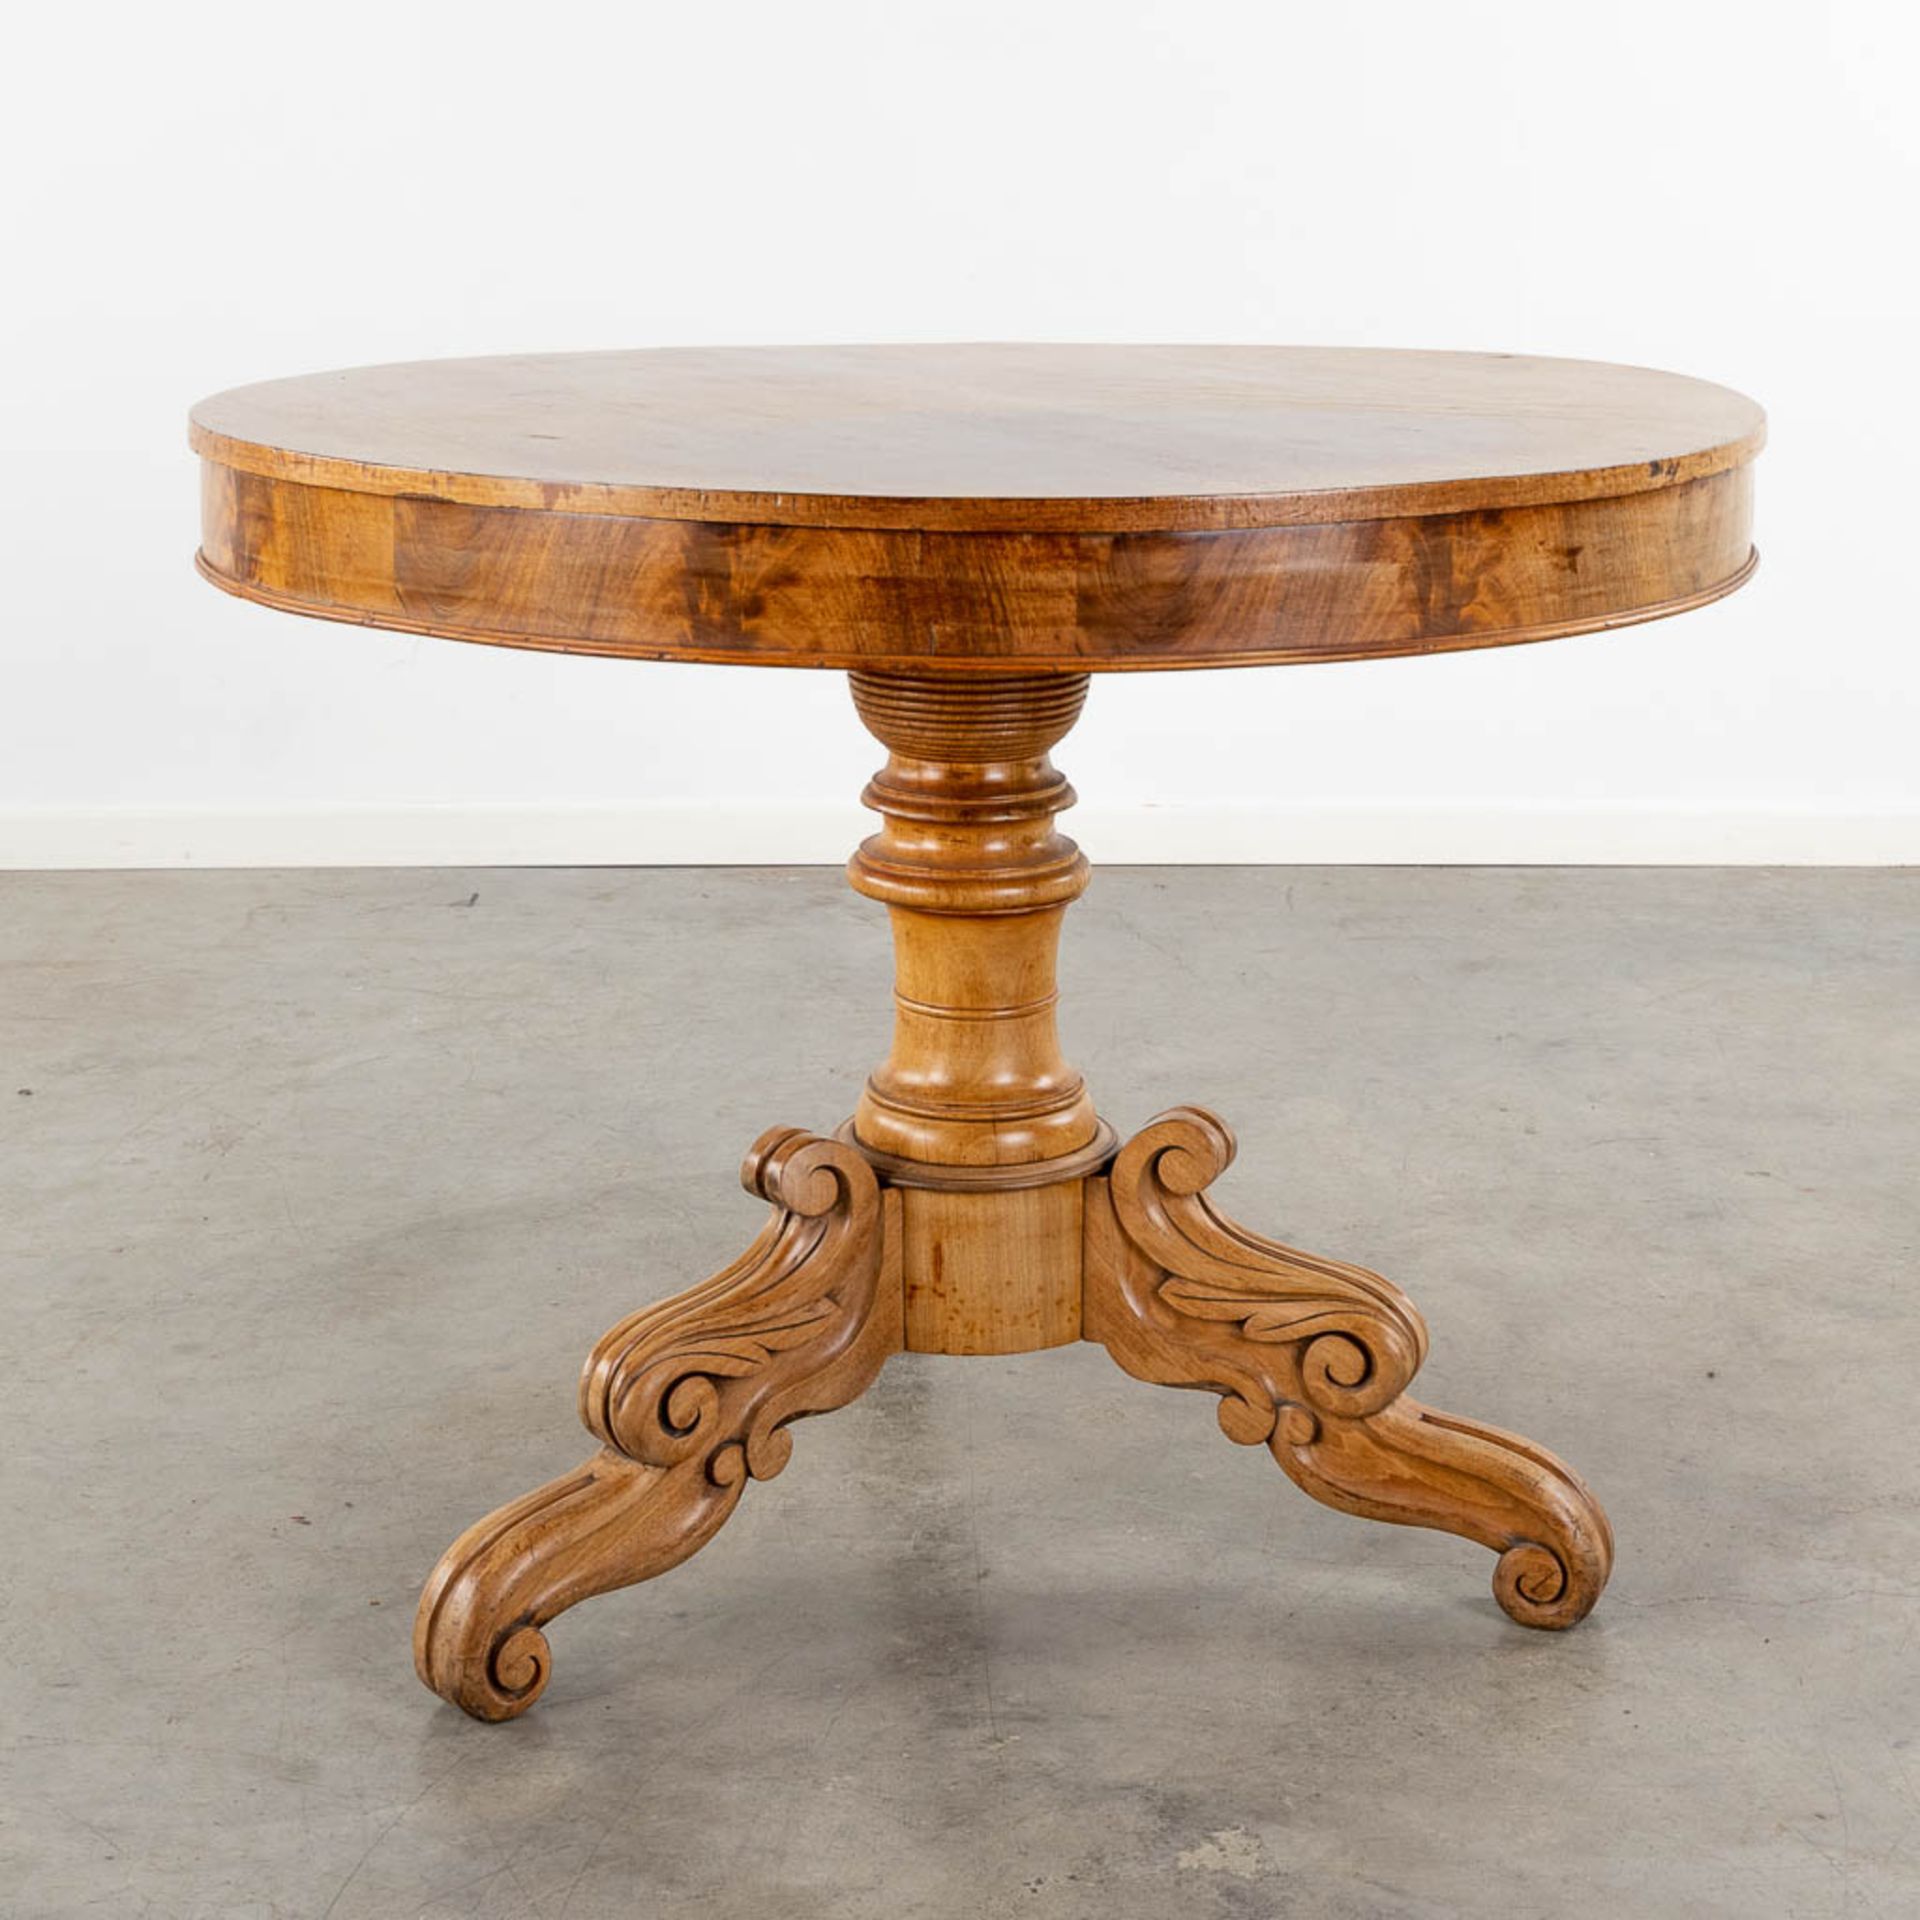 A round table, walnut, 19th C (H:77 x D:99 cm)